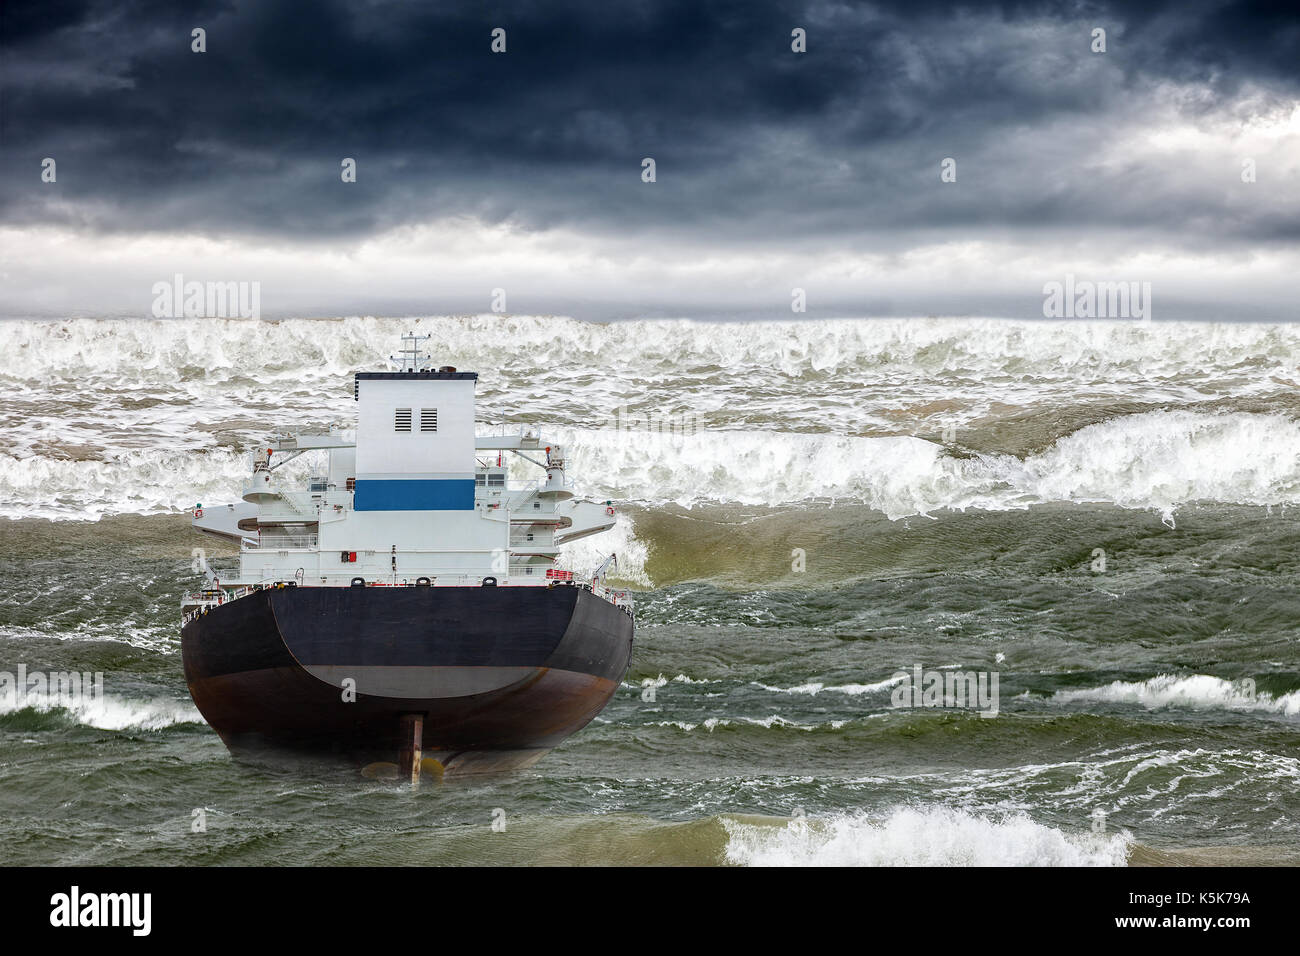 Tsunami disaster that threatens a ship on sea. Stock Photo